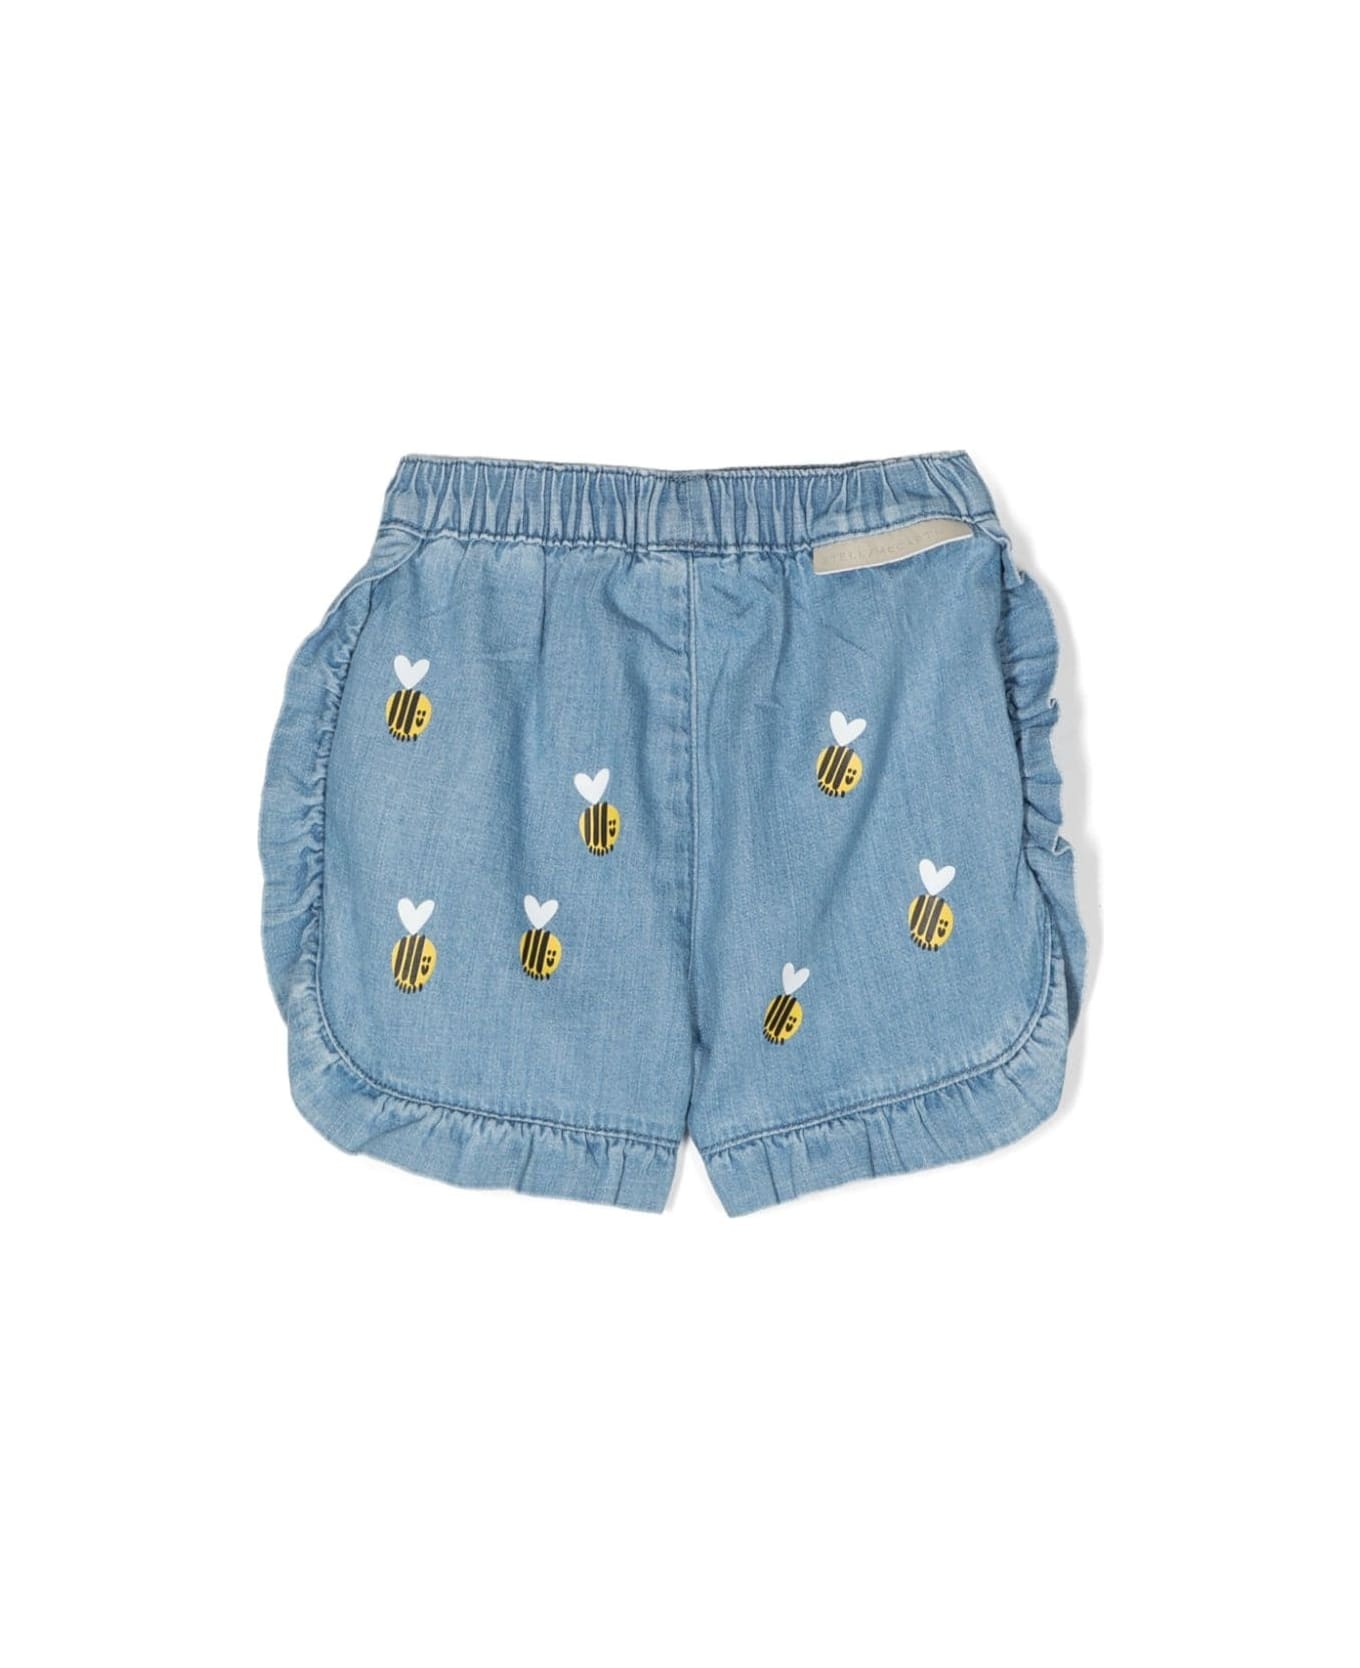 Stella McCartney Kids Bumblebee Embroidery Denim Shorts In Blue - Blue